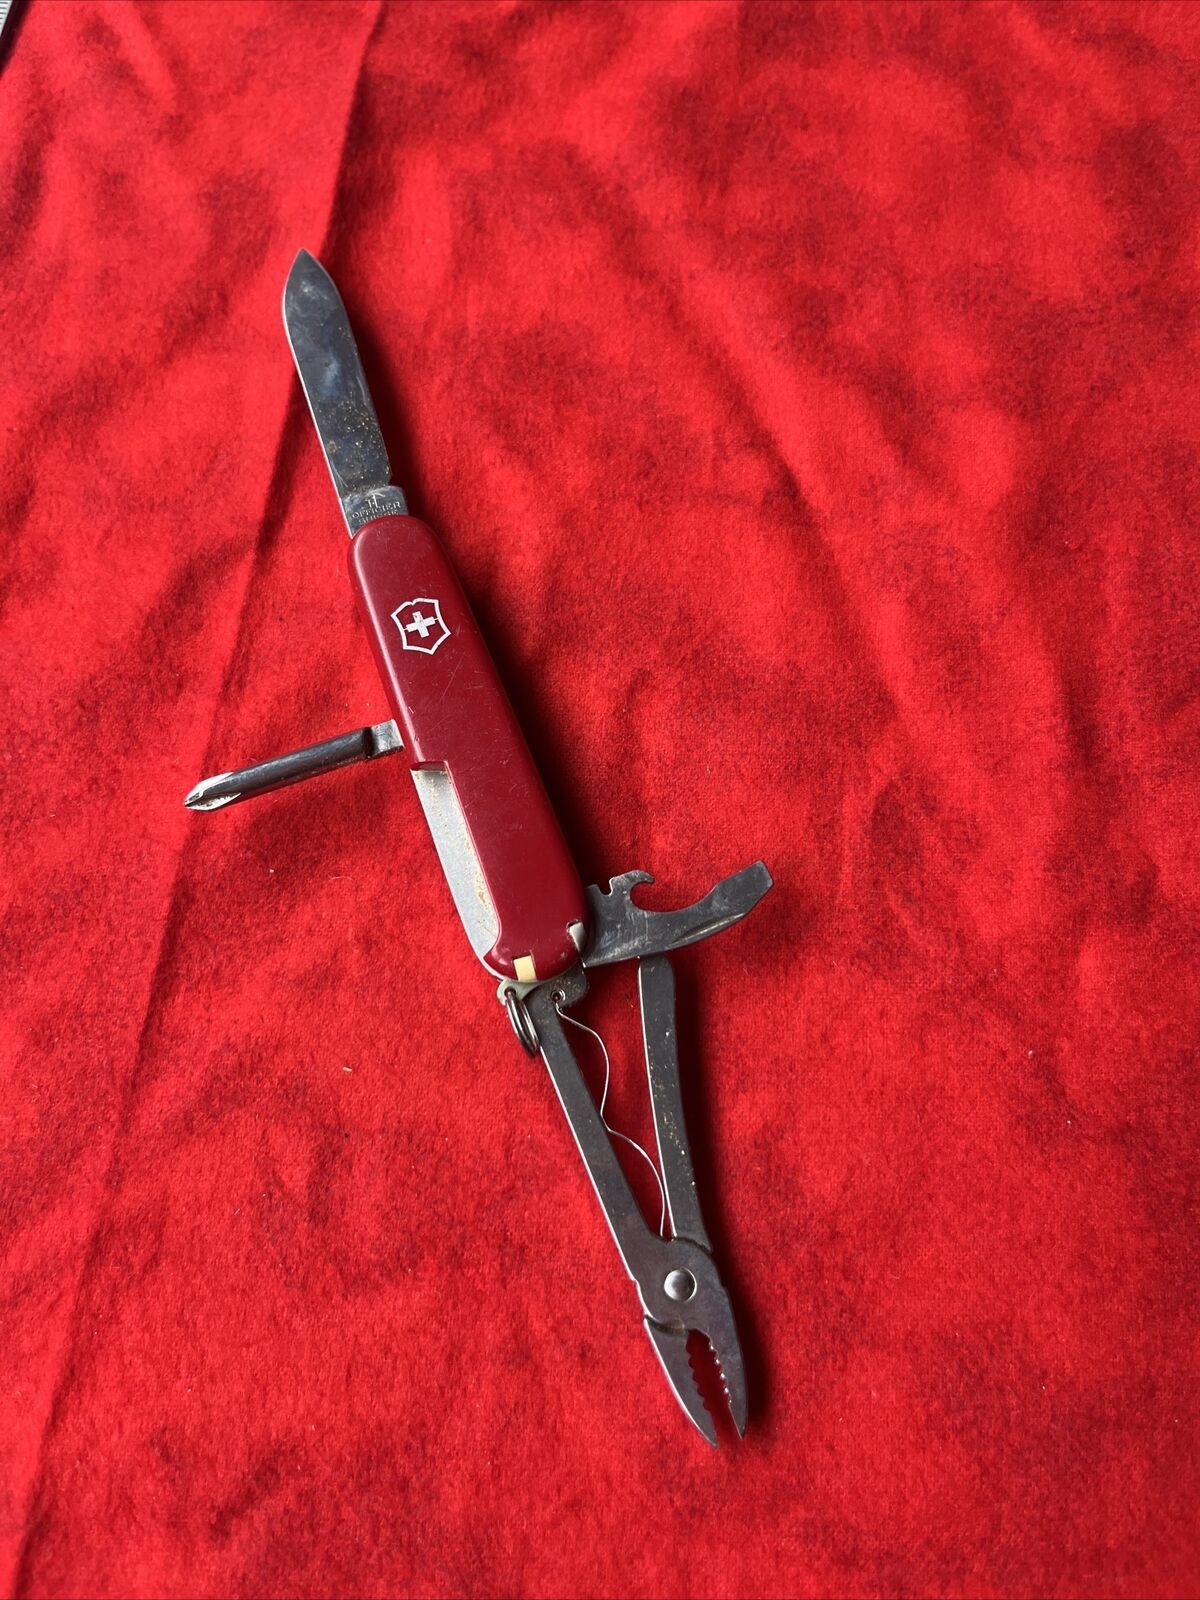 VINTAGE VICTORINOX SWISS ARMY OFFICER SUISSE POCKET KNIFE TOOL (h59)